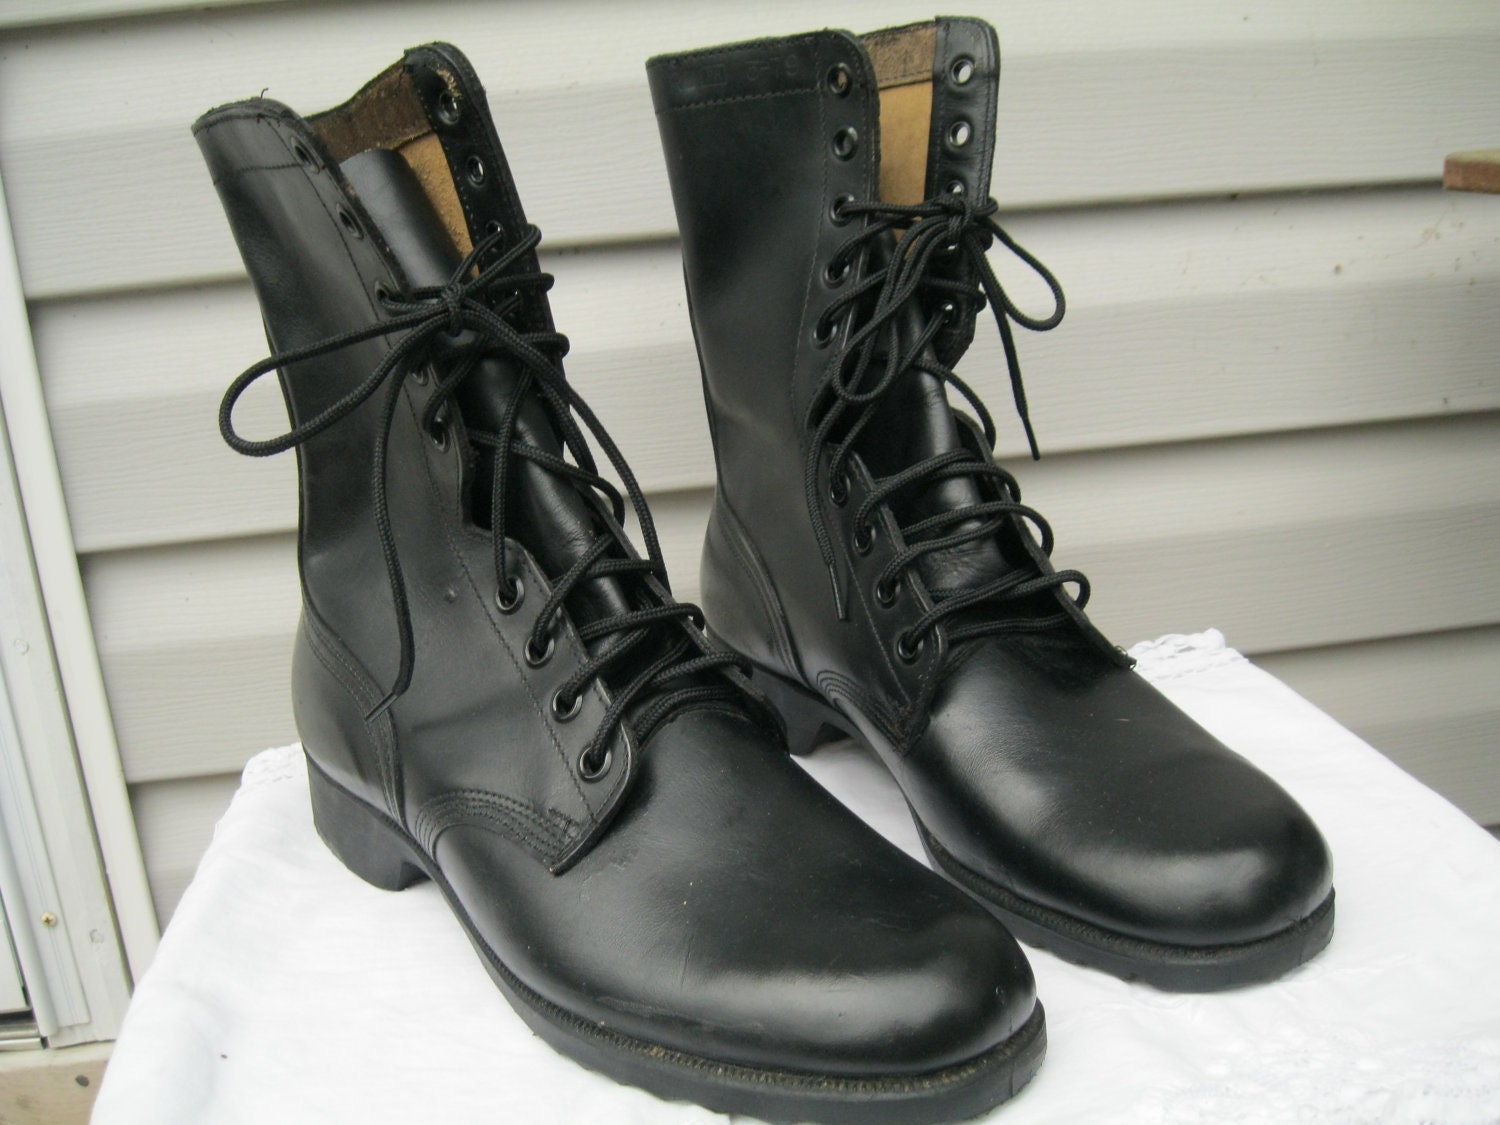 Vintage black leather military combat boots mens by ZenasAttic